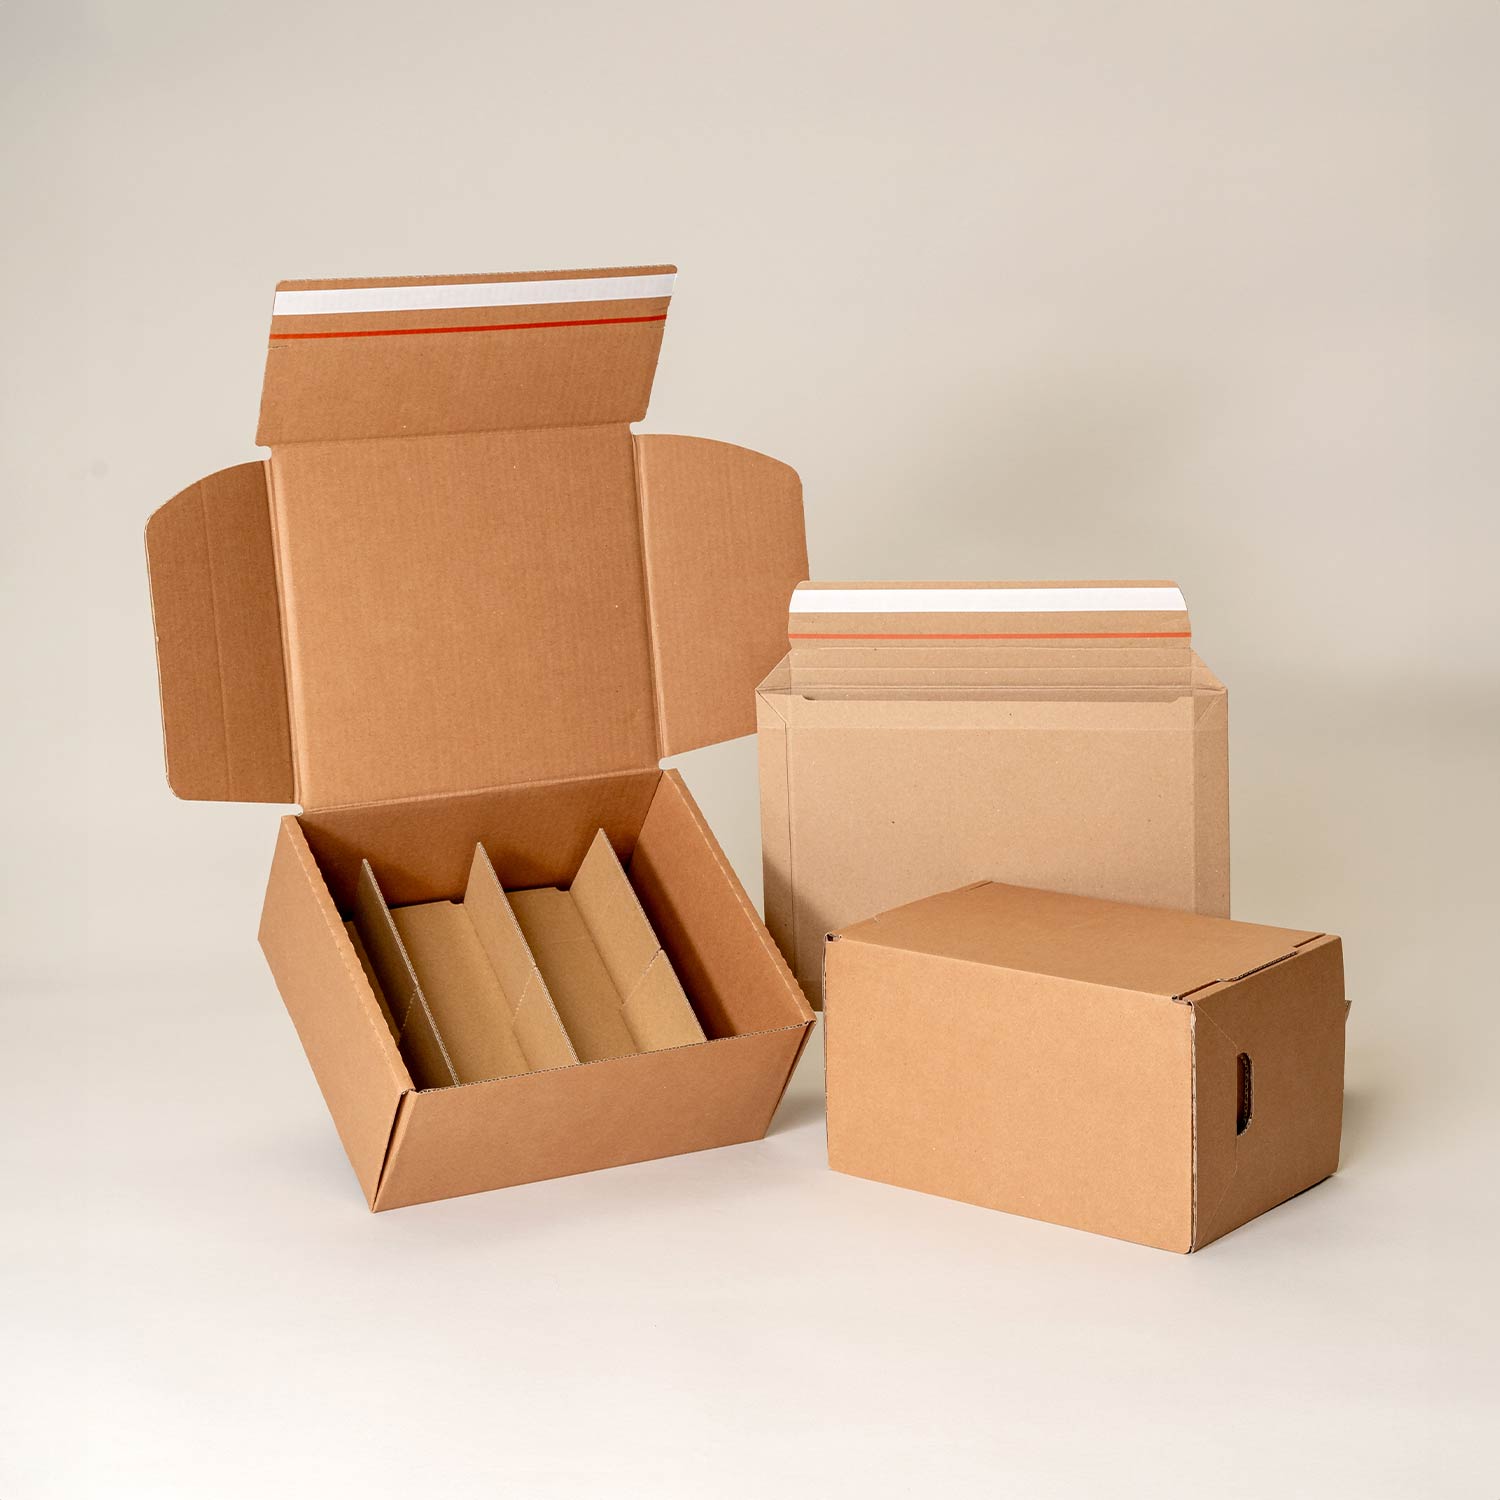 Acheter des emballages en carton ondulé